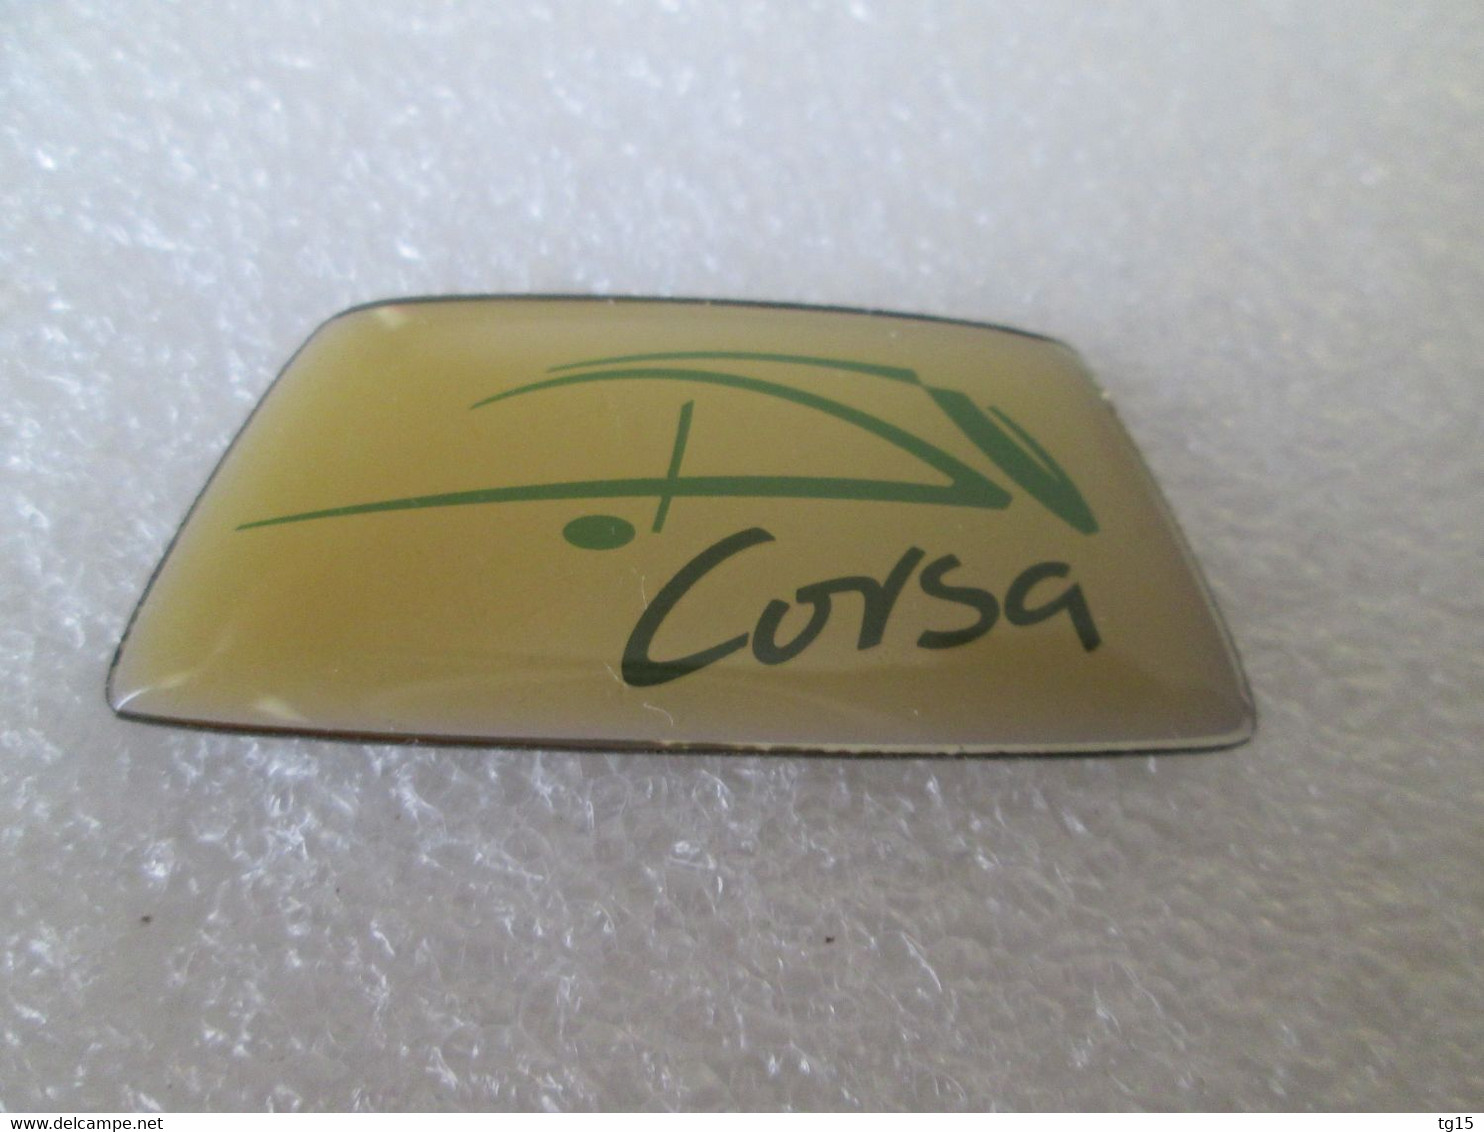 PIN'S     OPEL   CORSA - Opel